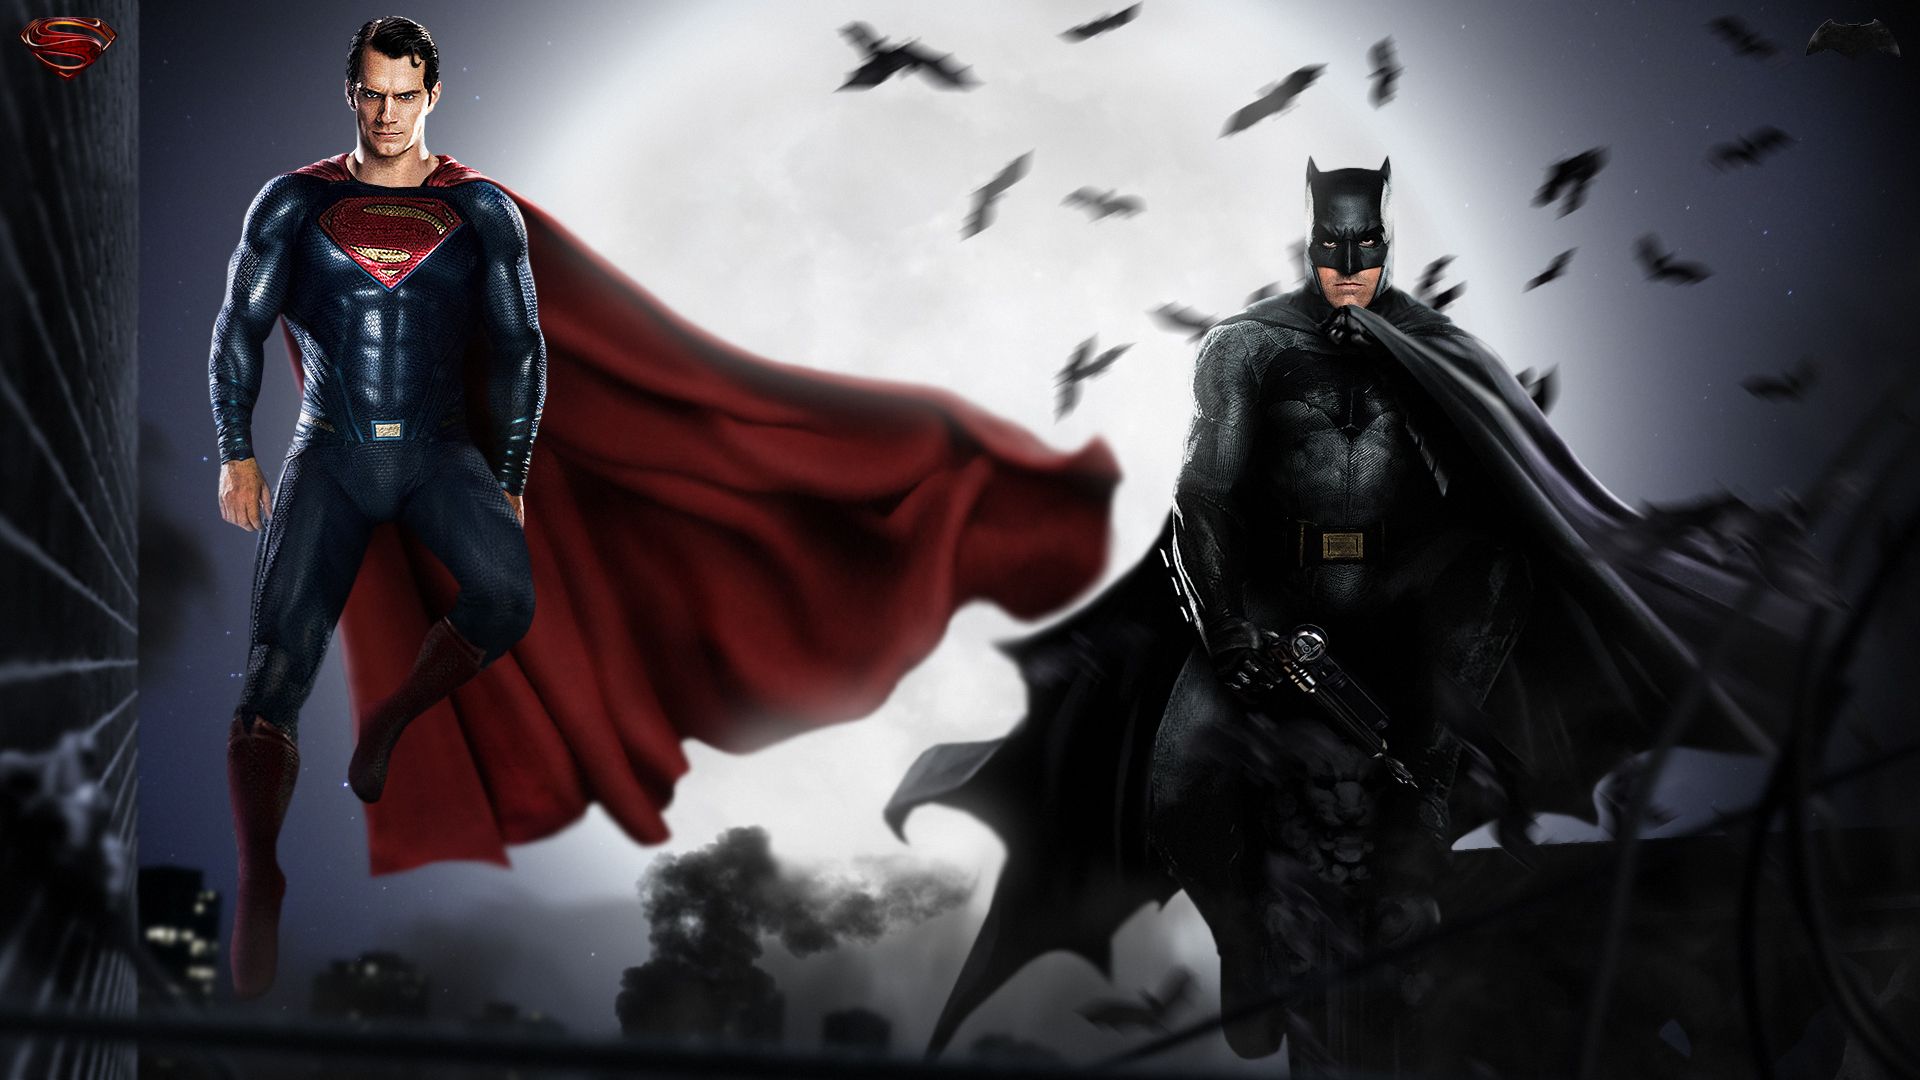 Batman vs Superman HQ Wallpapers Full HD Pictures